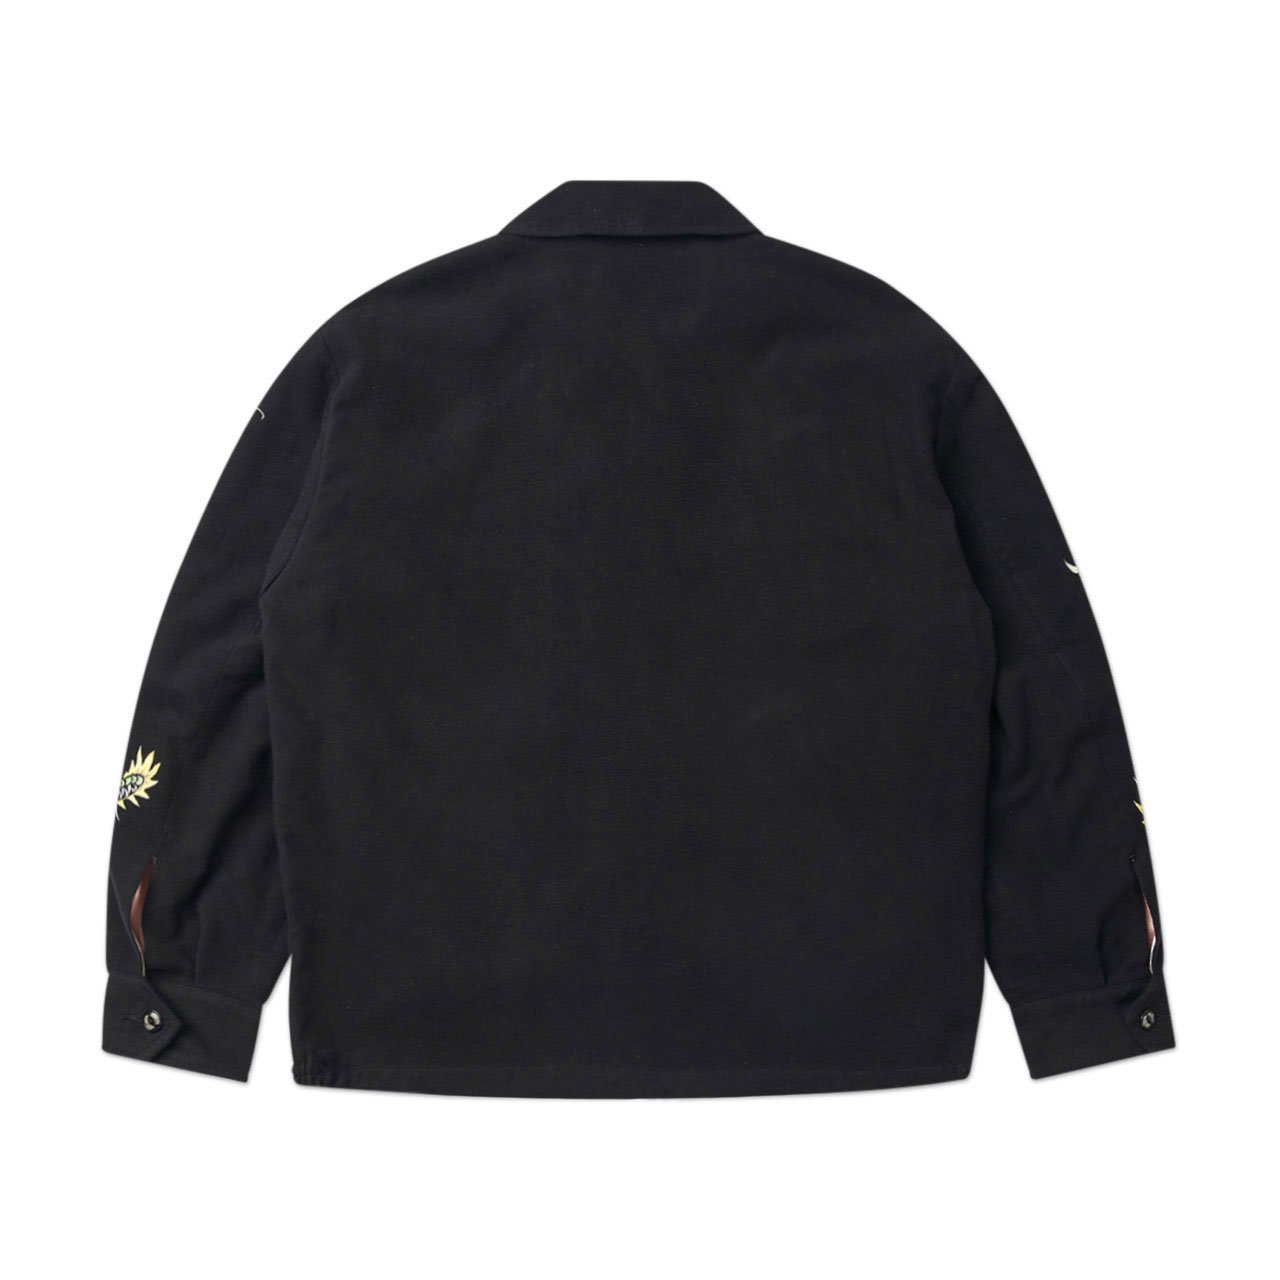 wacko maria tim lehi / vietnam jacket (black) - timlehi-wm-ml11 - a.plus - Image - 2